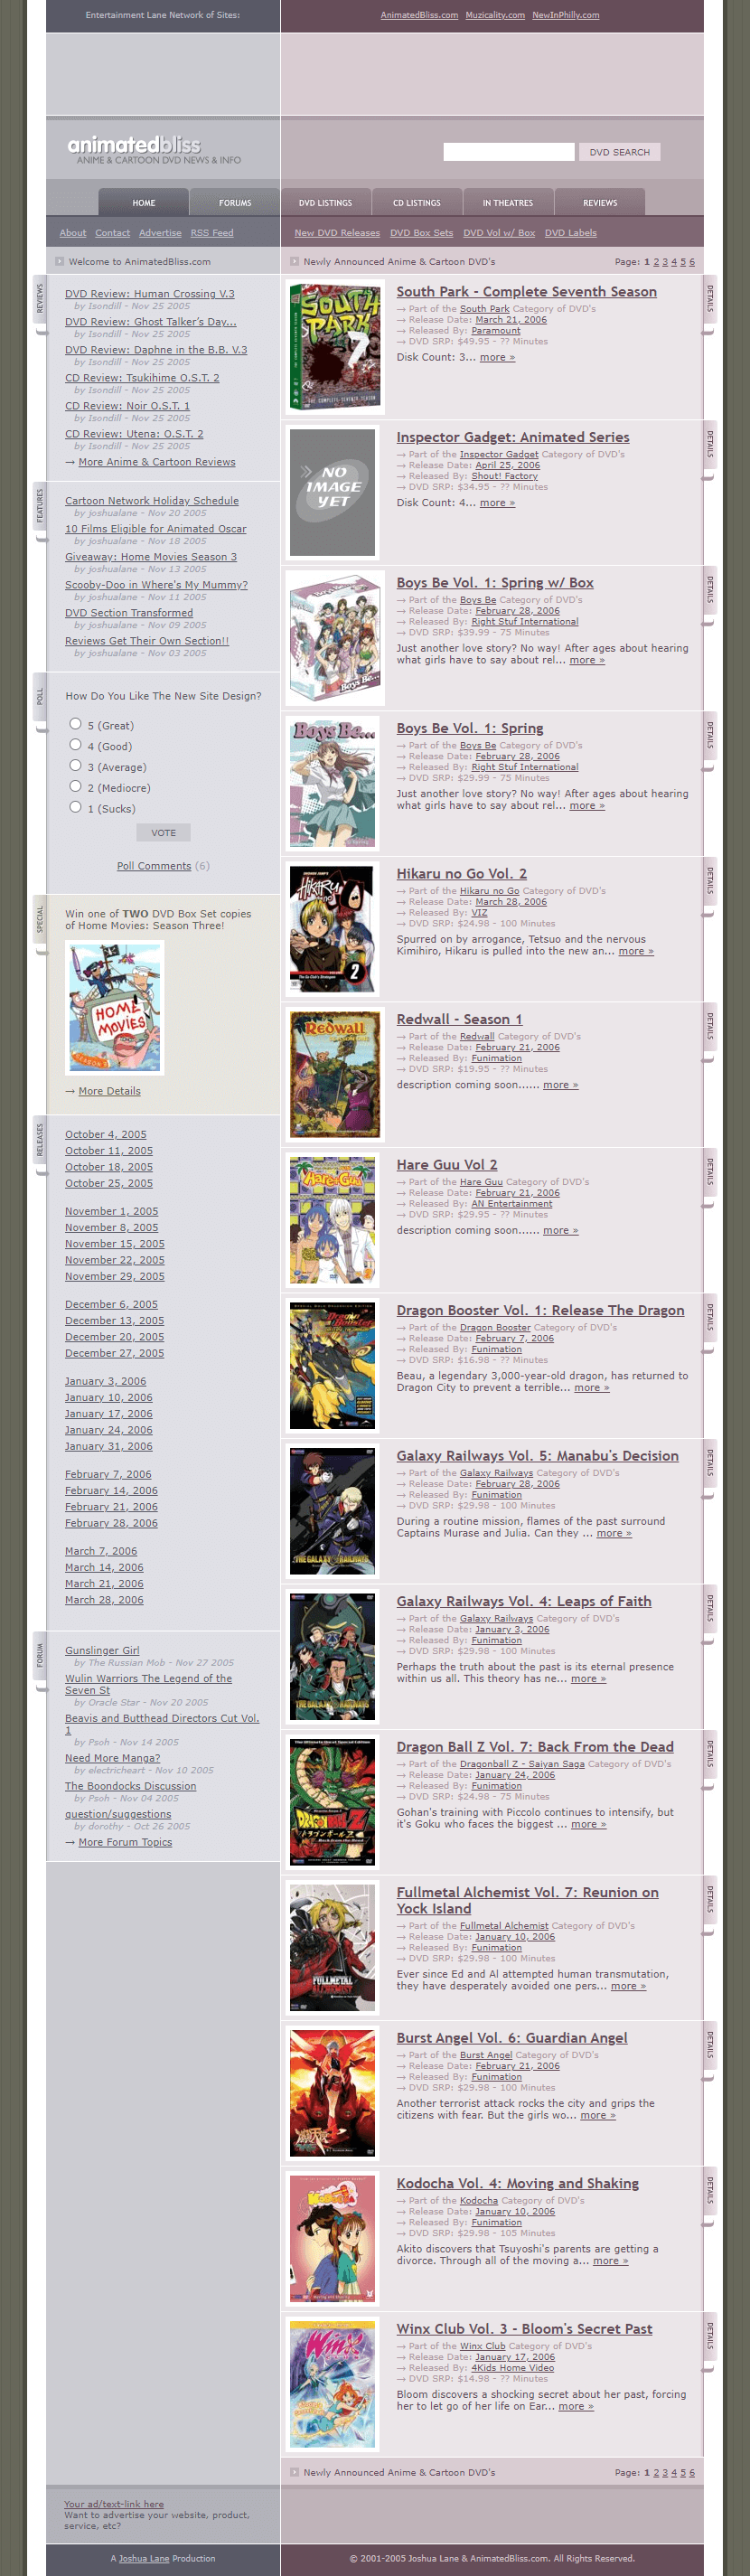 AnimatedBliss website in 2005